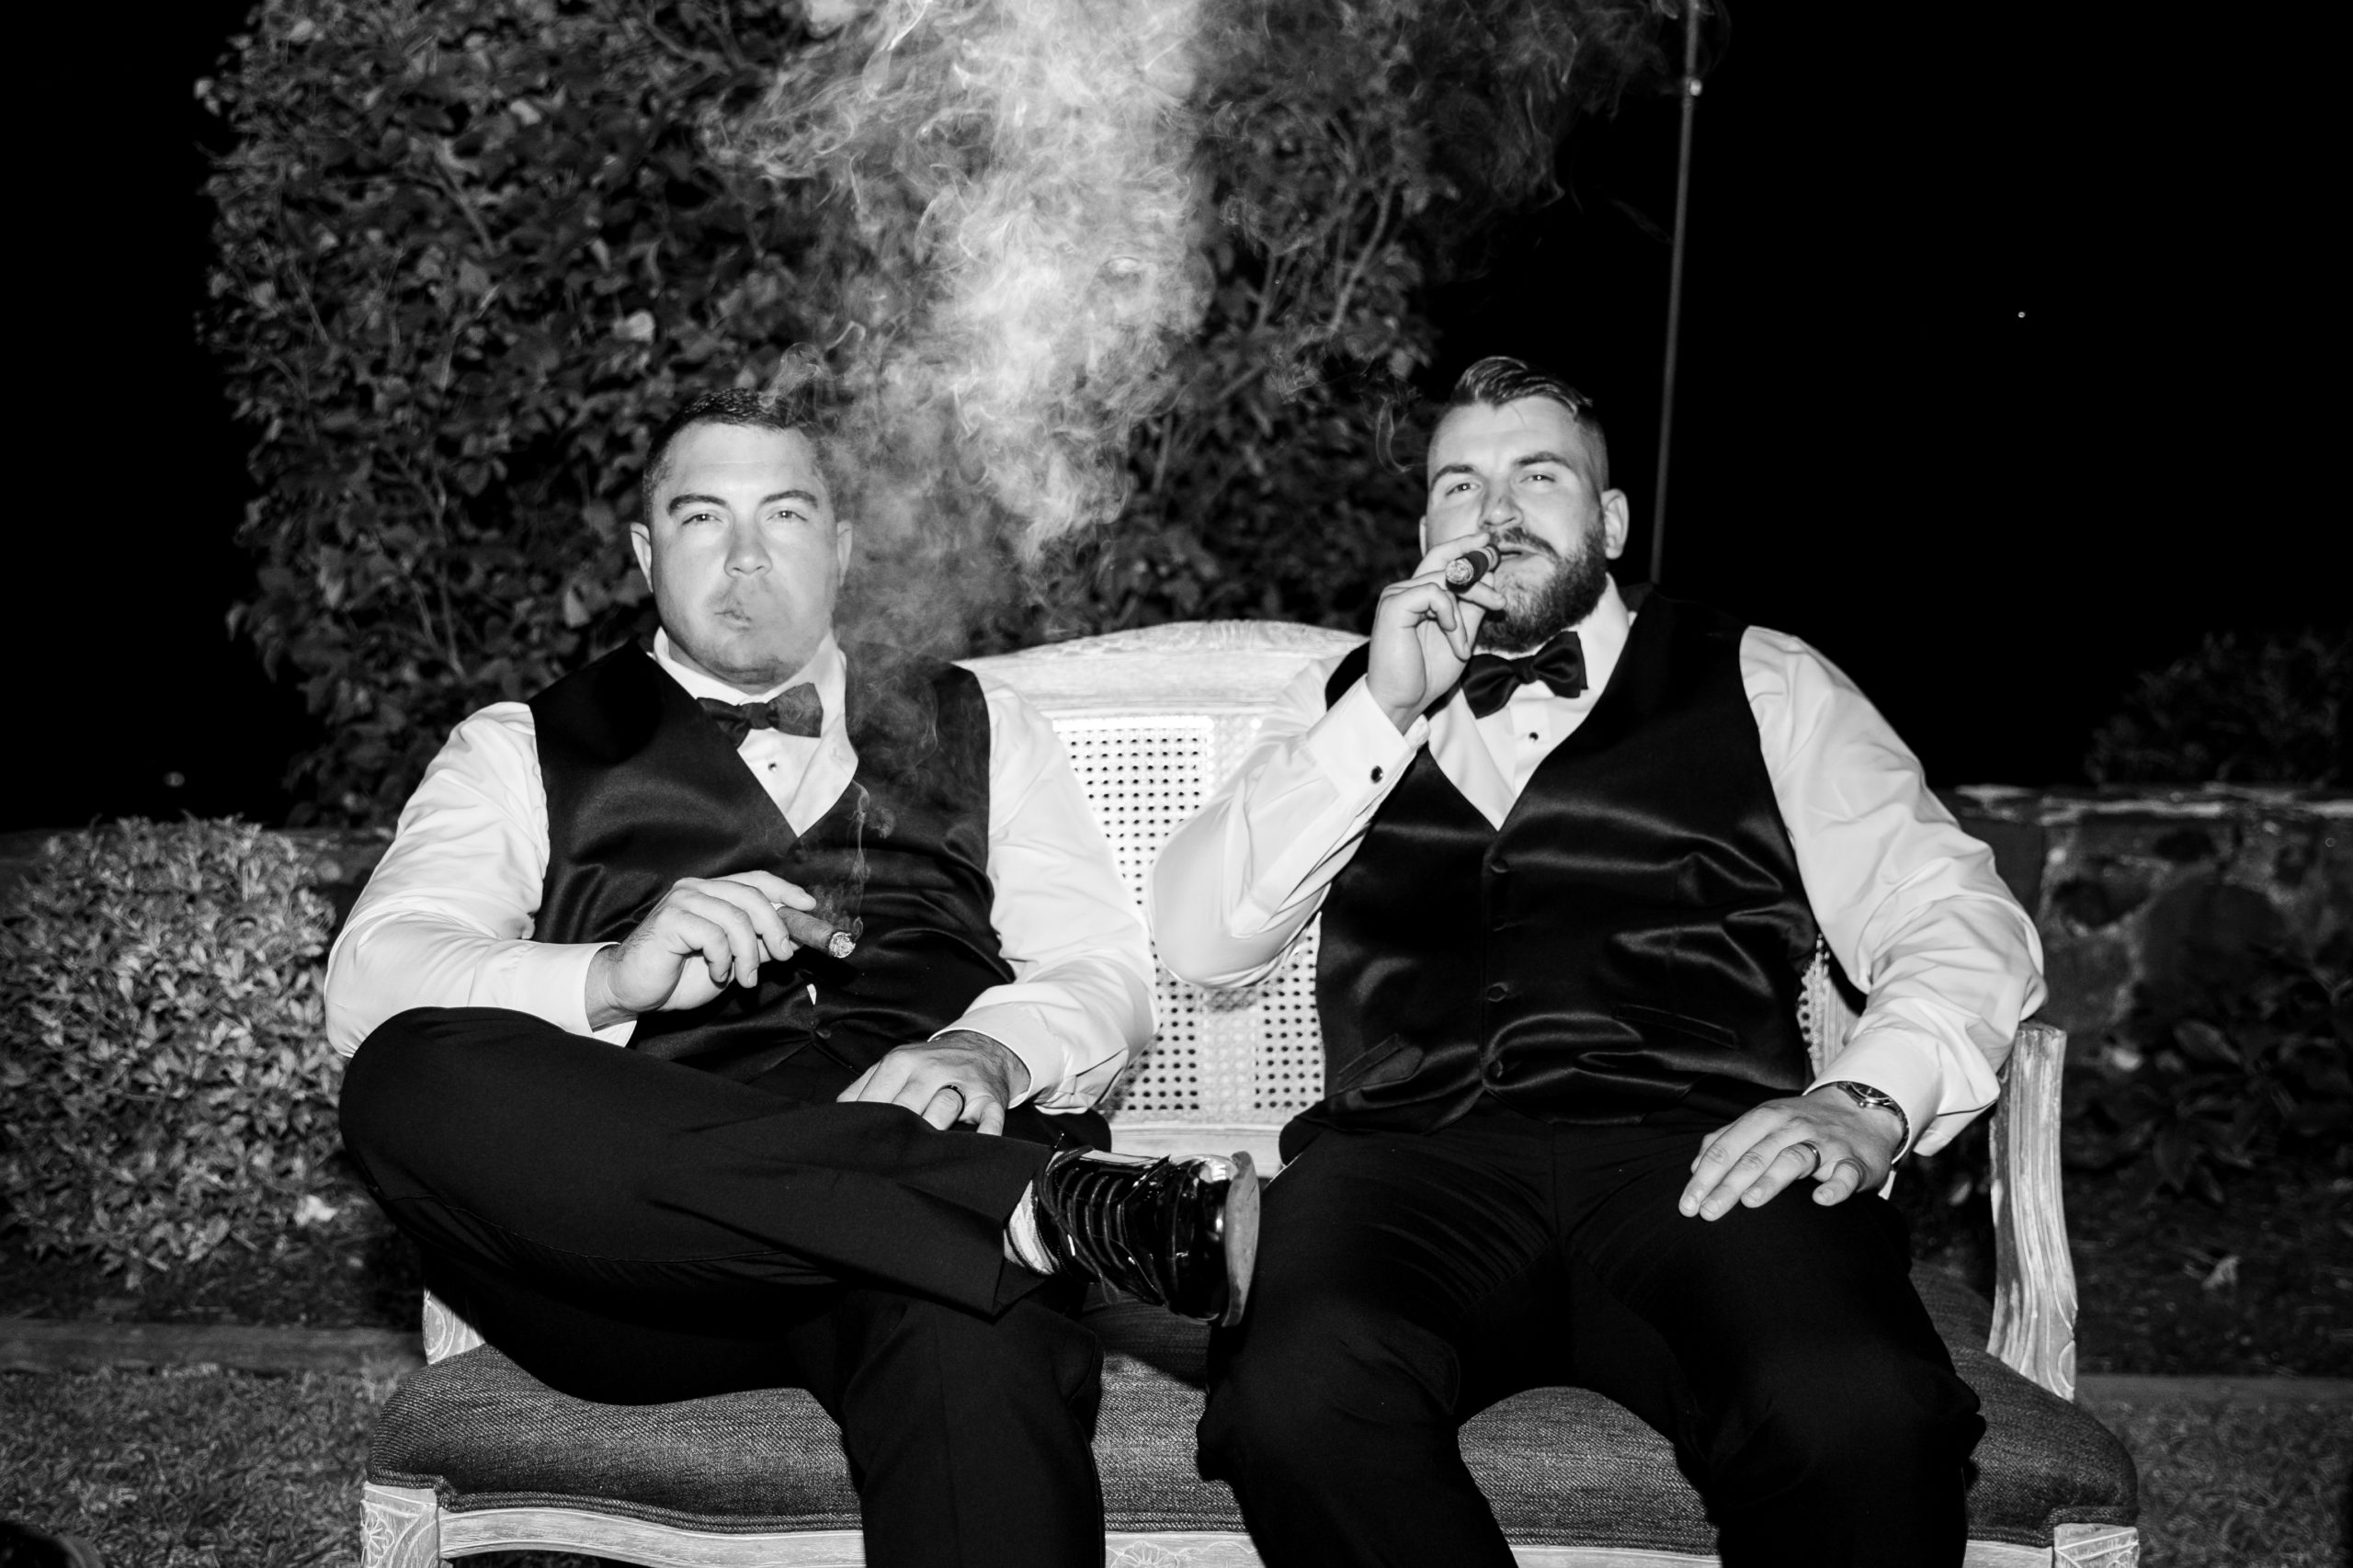 Cigar Smoky Photograph - Rockfield Manor, Bel Air - Luxury Wedding Photographer - Wedding Photographer DMV